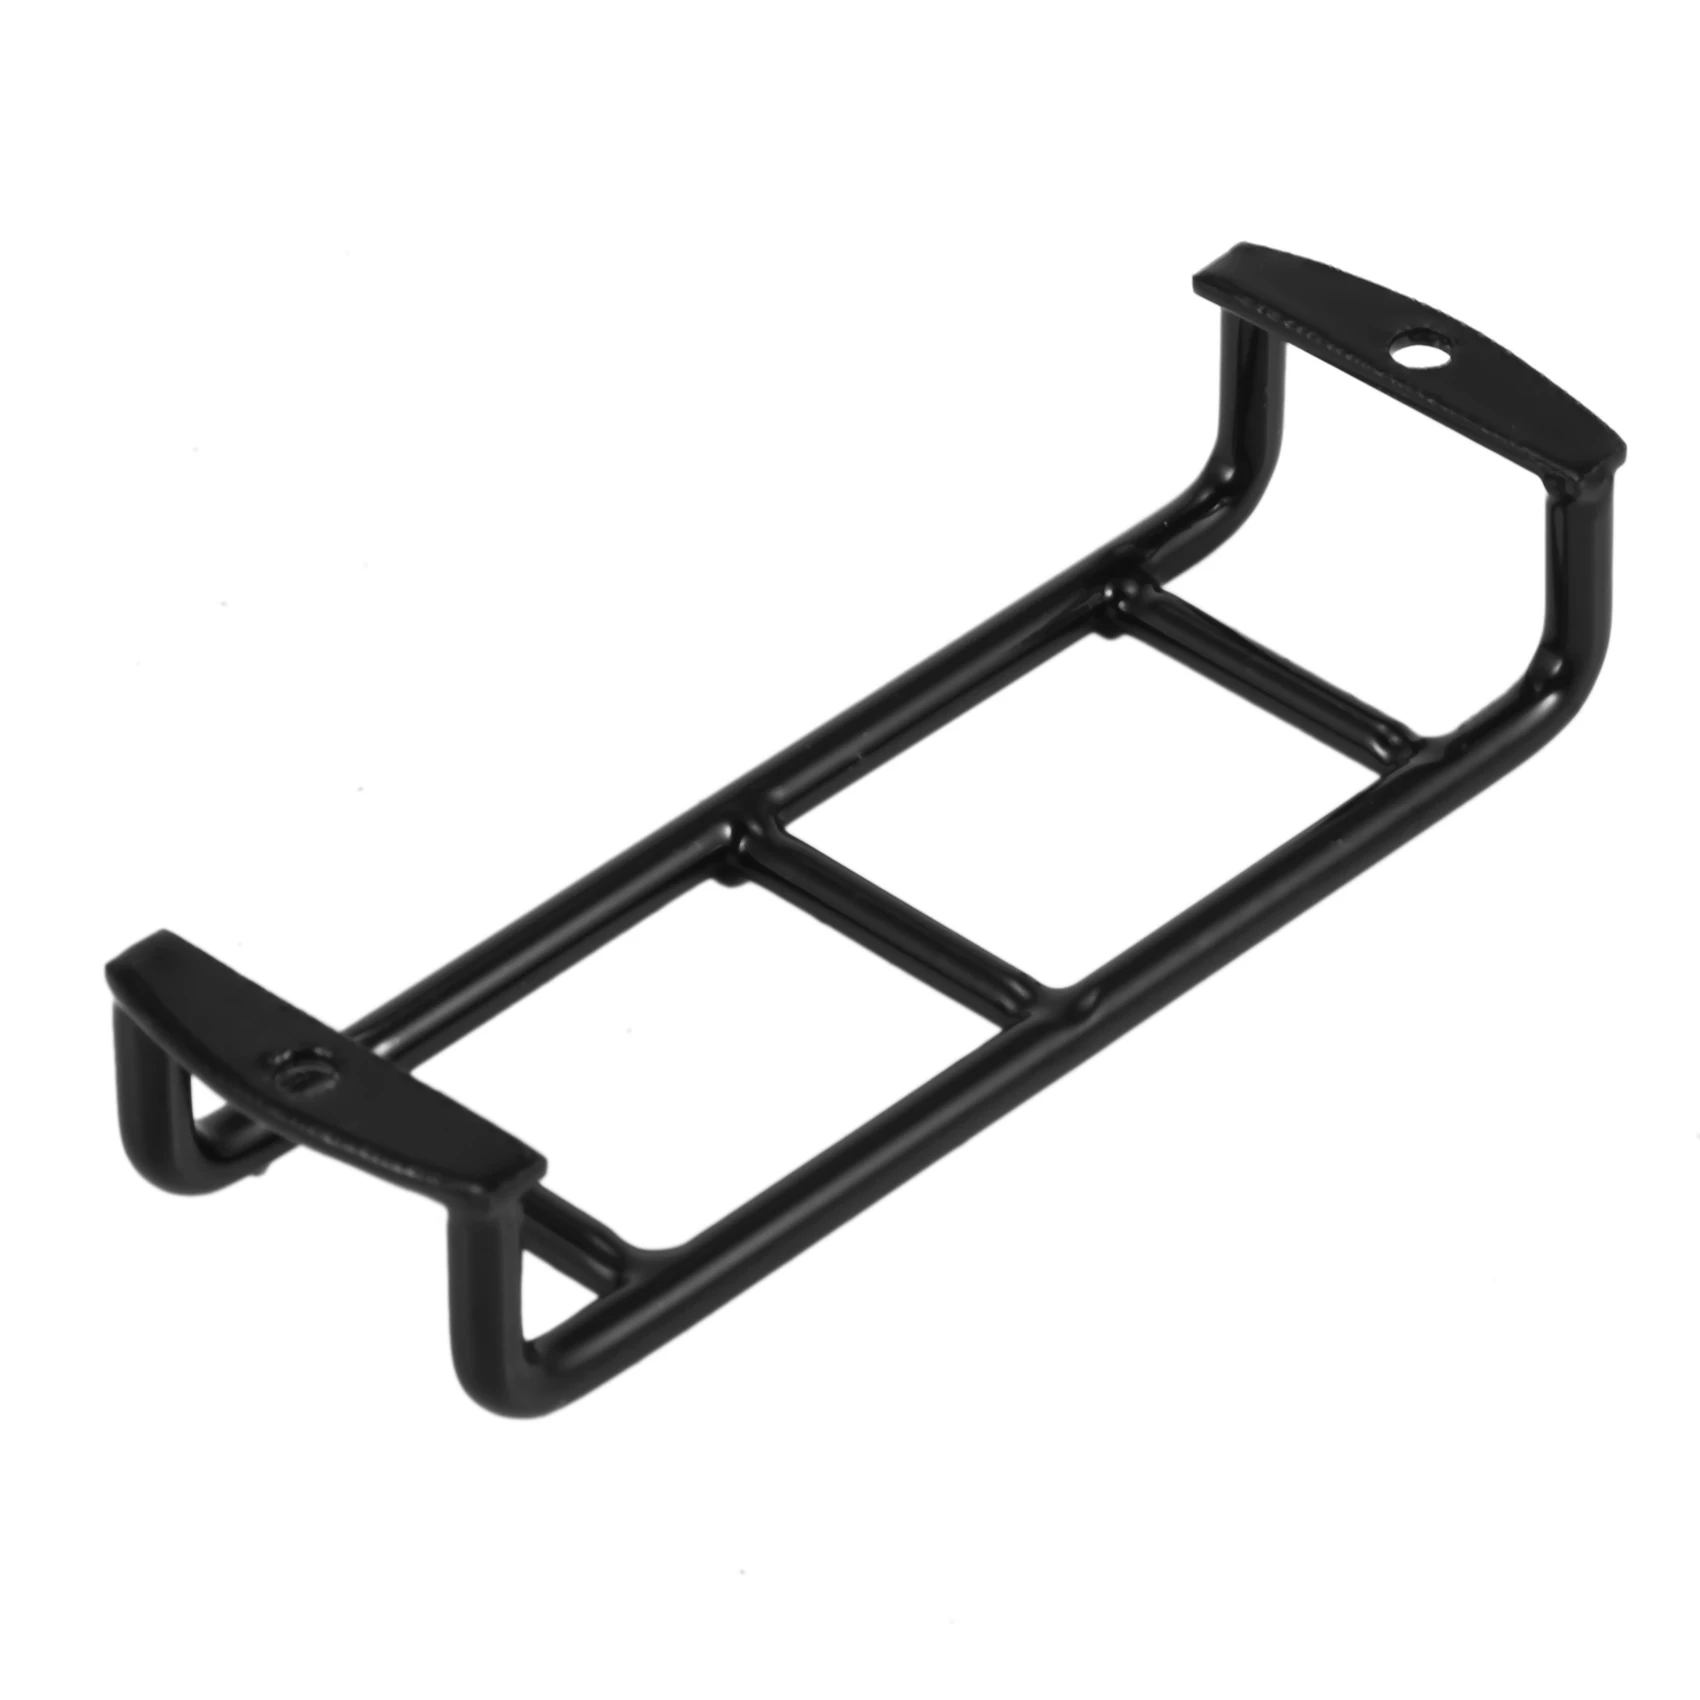 

Rc Car Metal Mini Ladder Stairs Accessories For Traxxas Trx4 Trx-4 Bronco Defender Body Scx10 90046 90047 D90 1/10 Rc Crawler